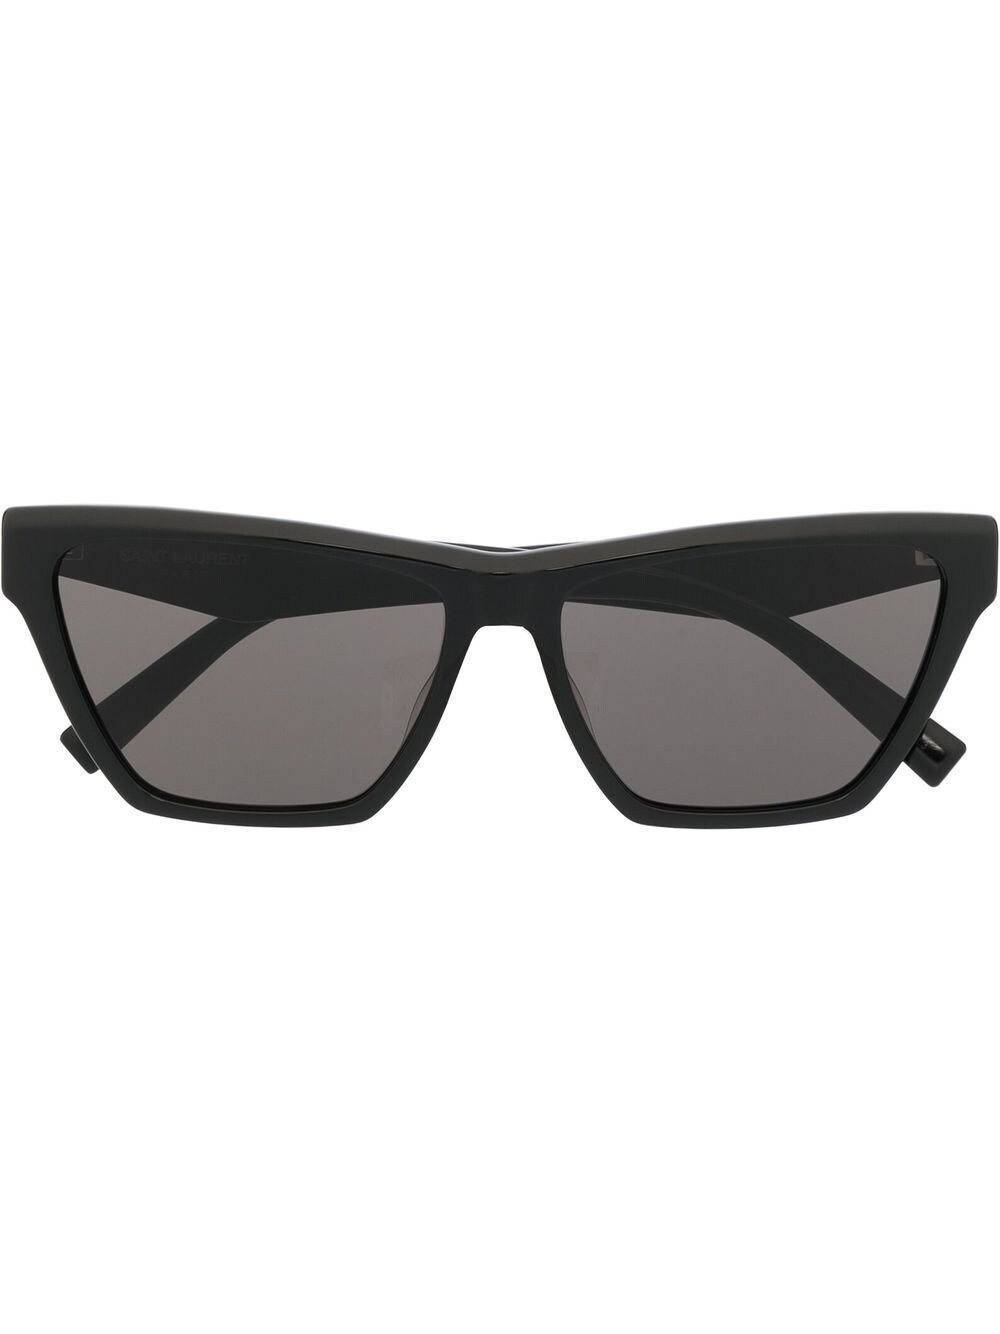 Saint Laurent Eyewear SL M103 cat-eye sunglasses black | MODES